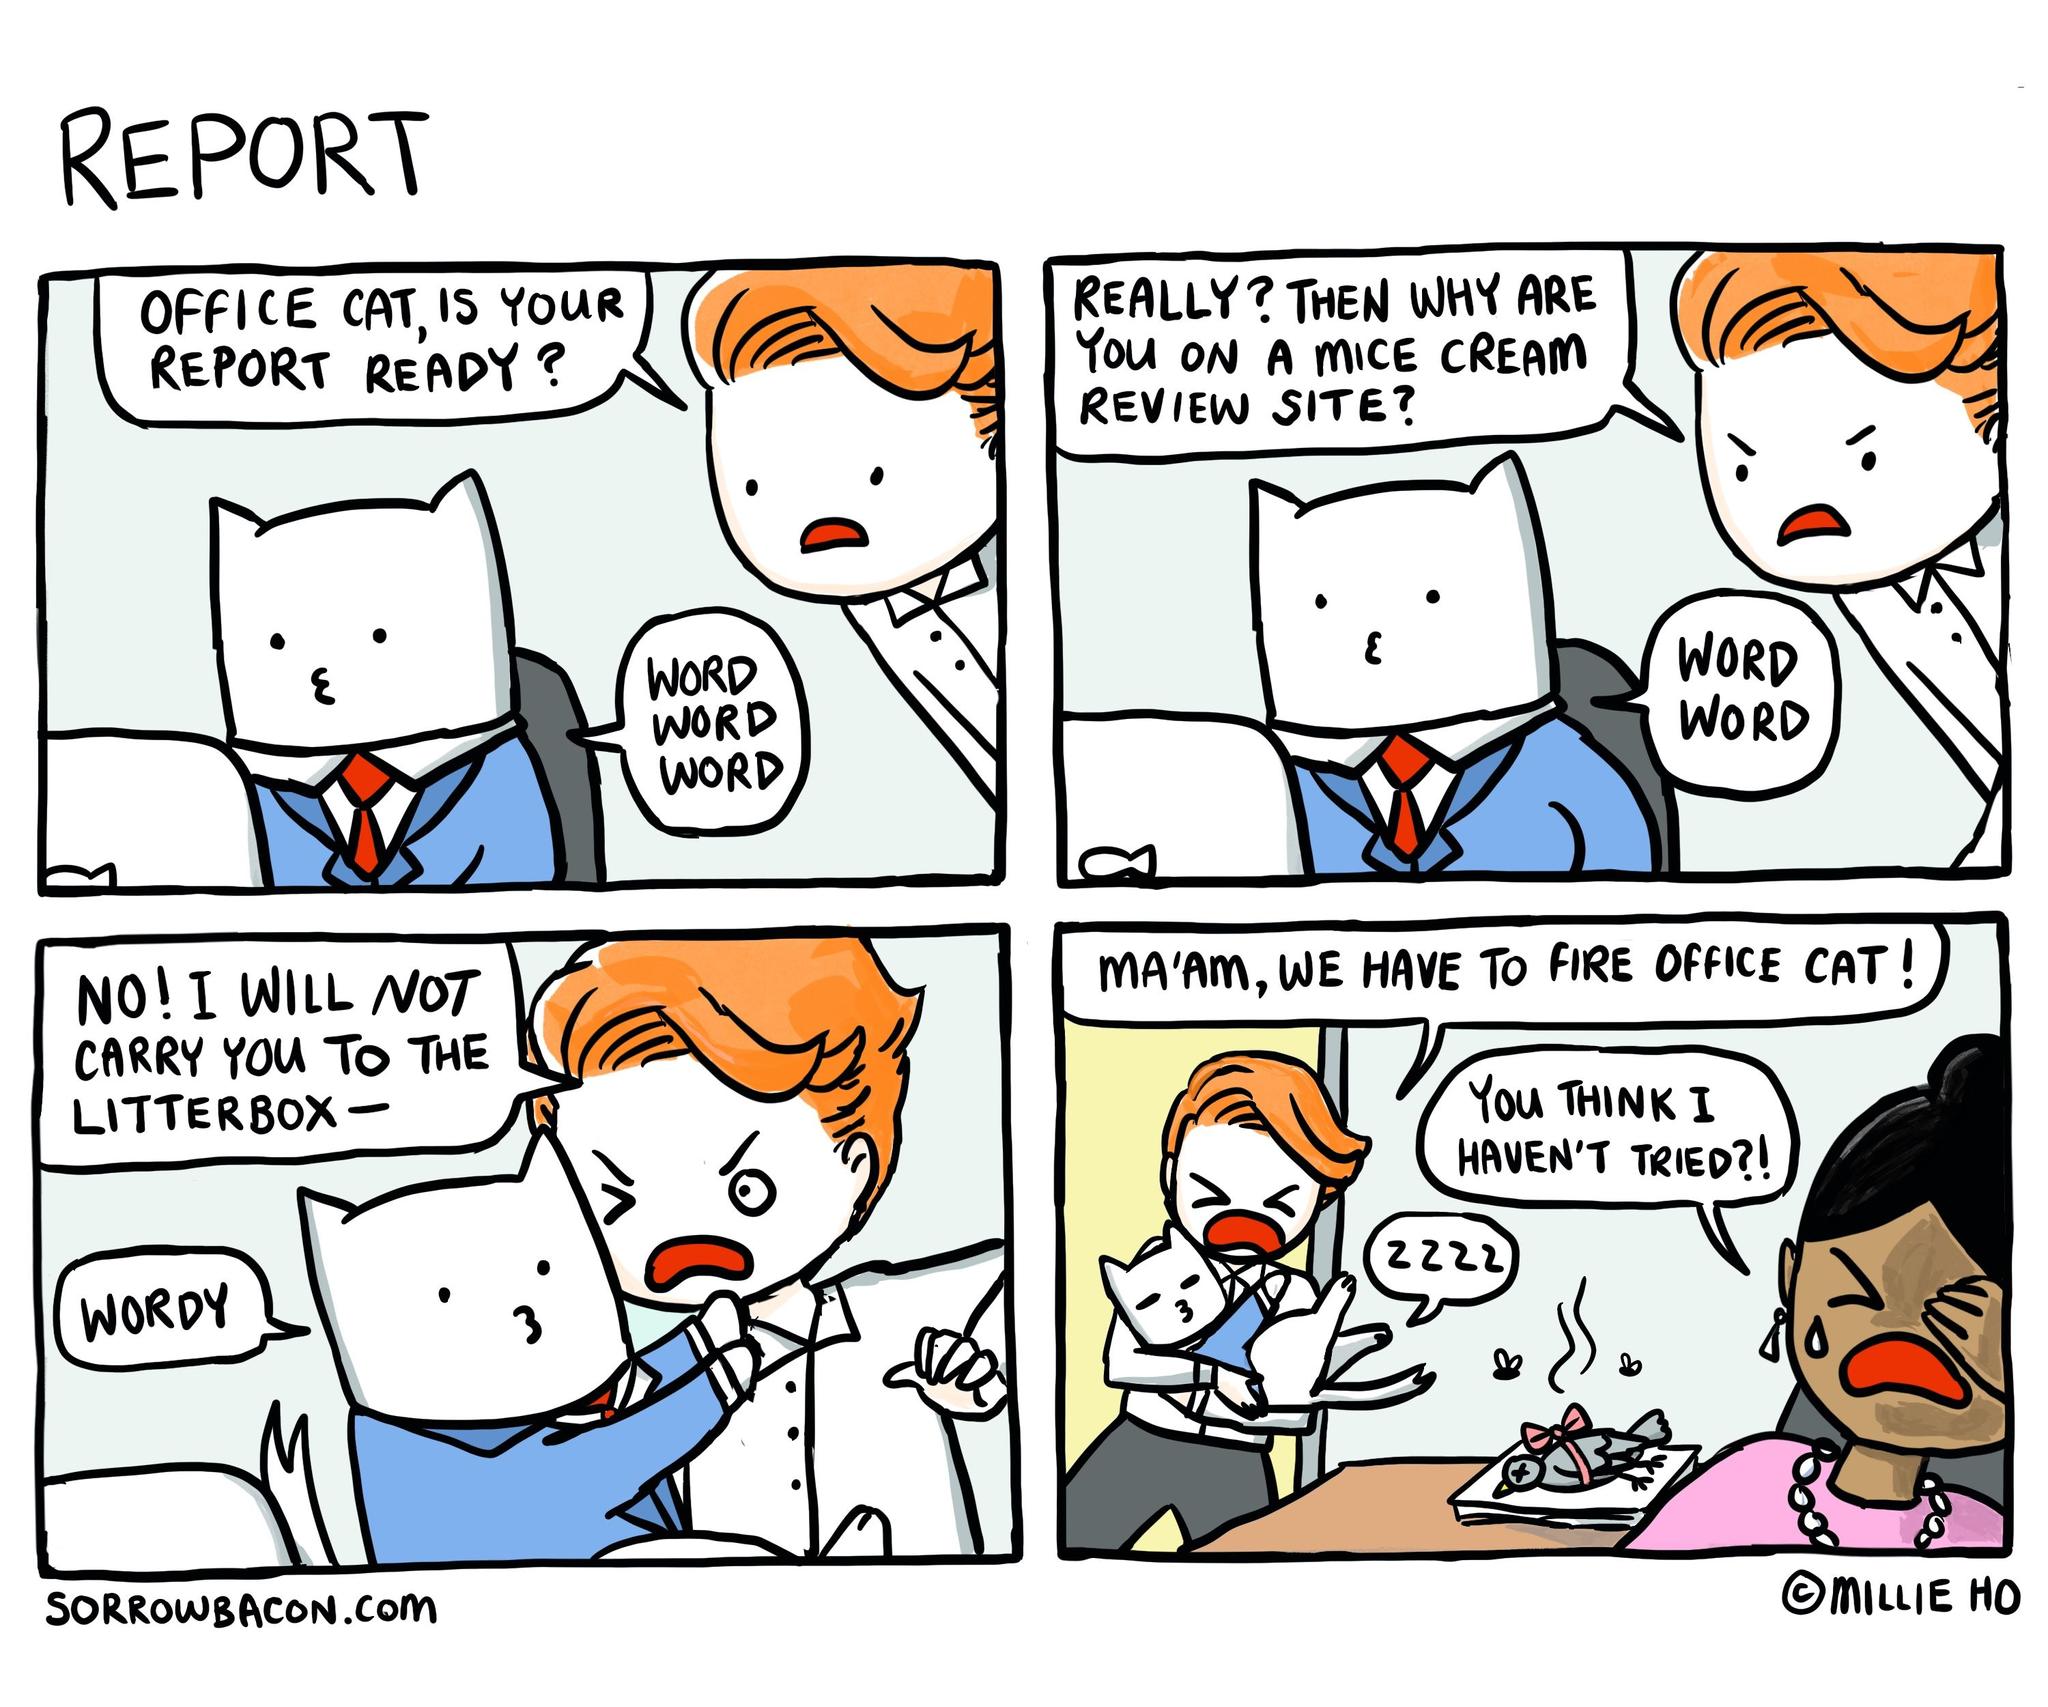 Report Office Cat sorrowbacon comic